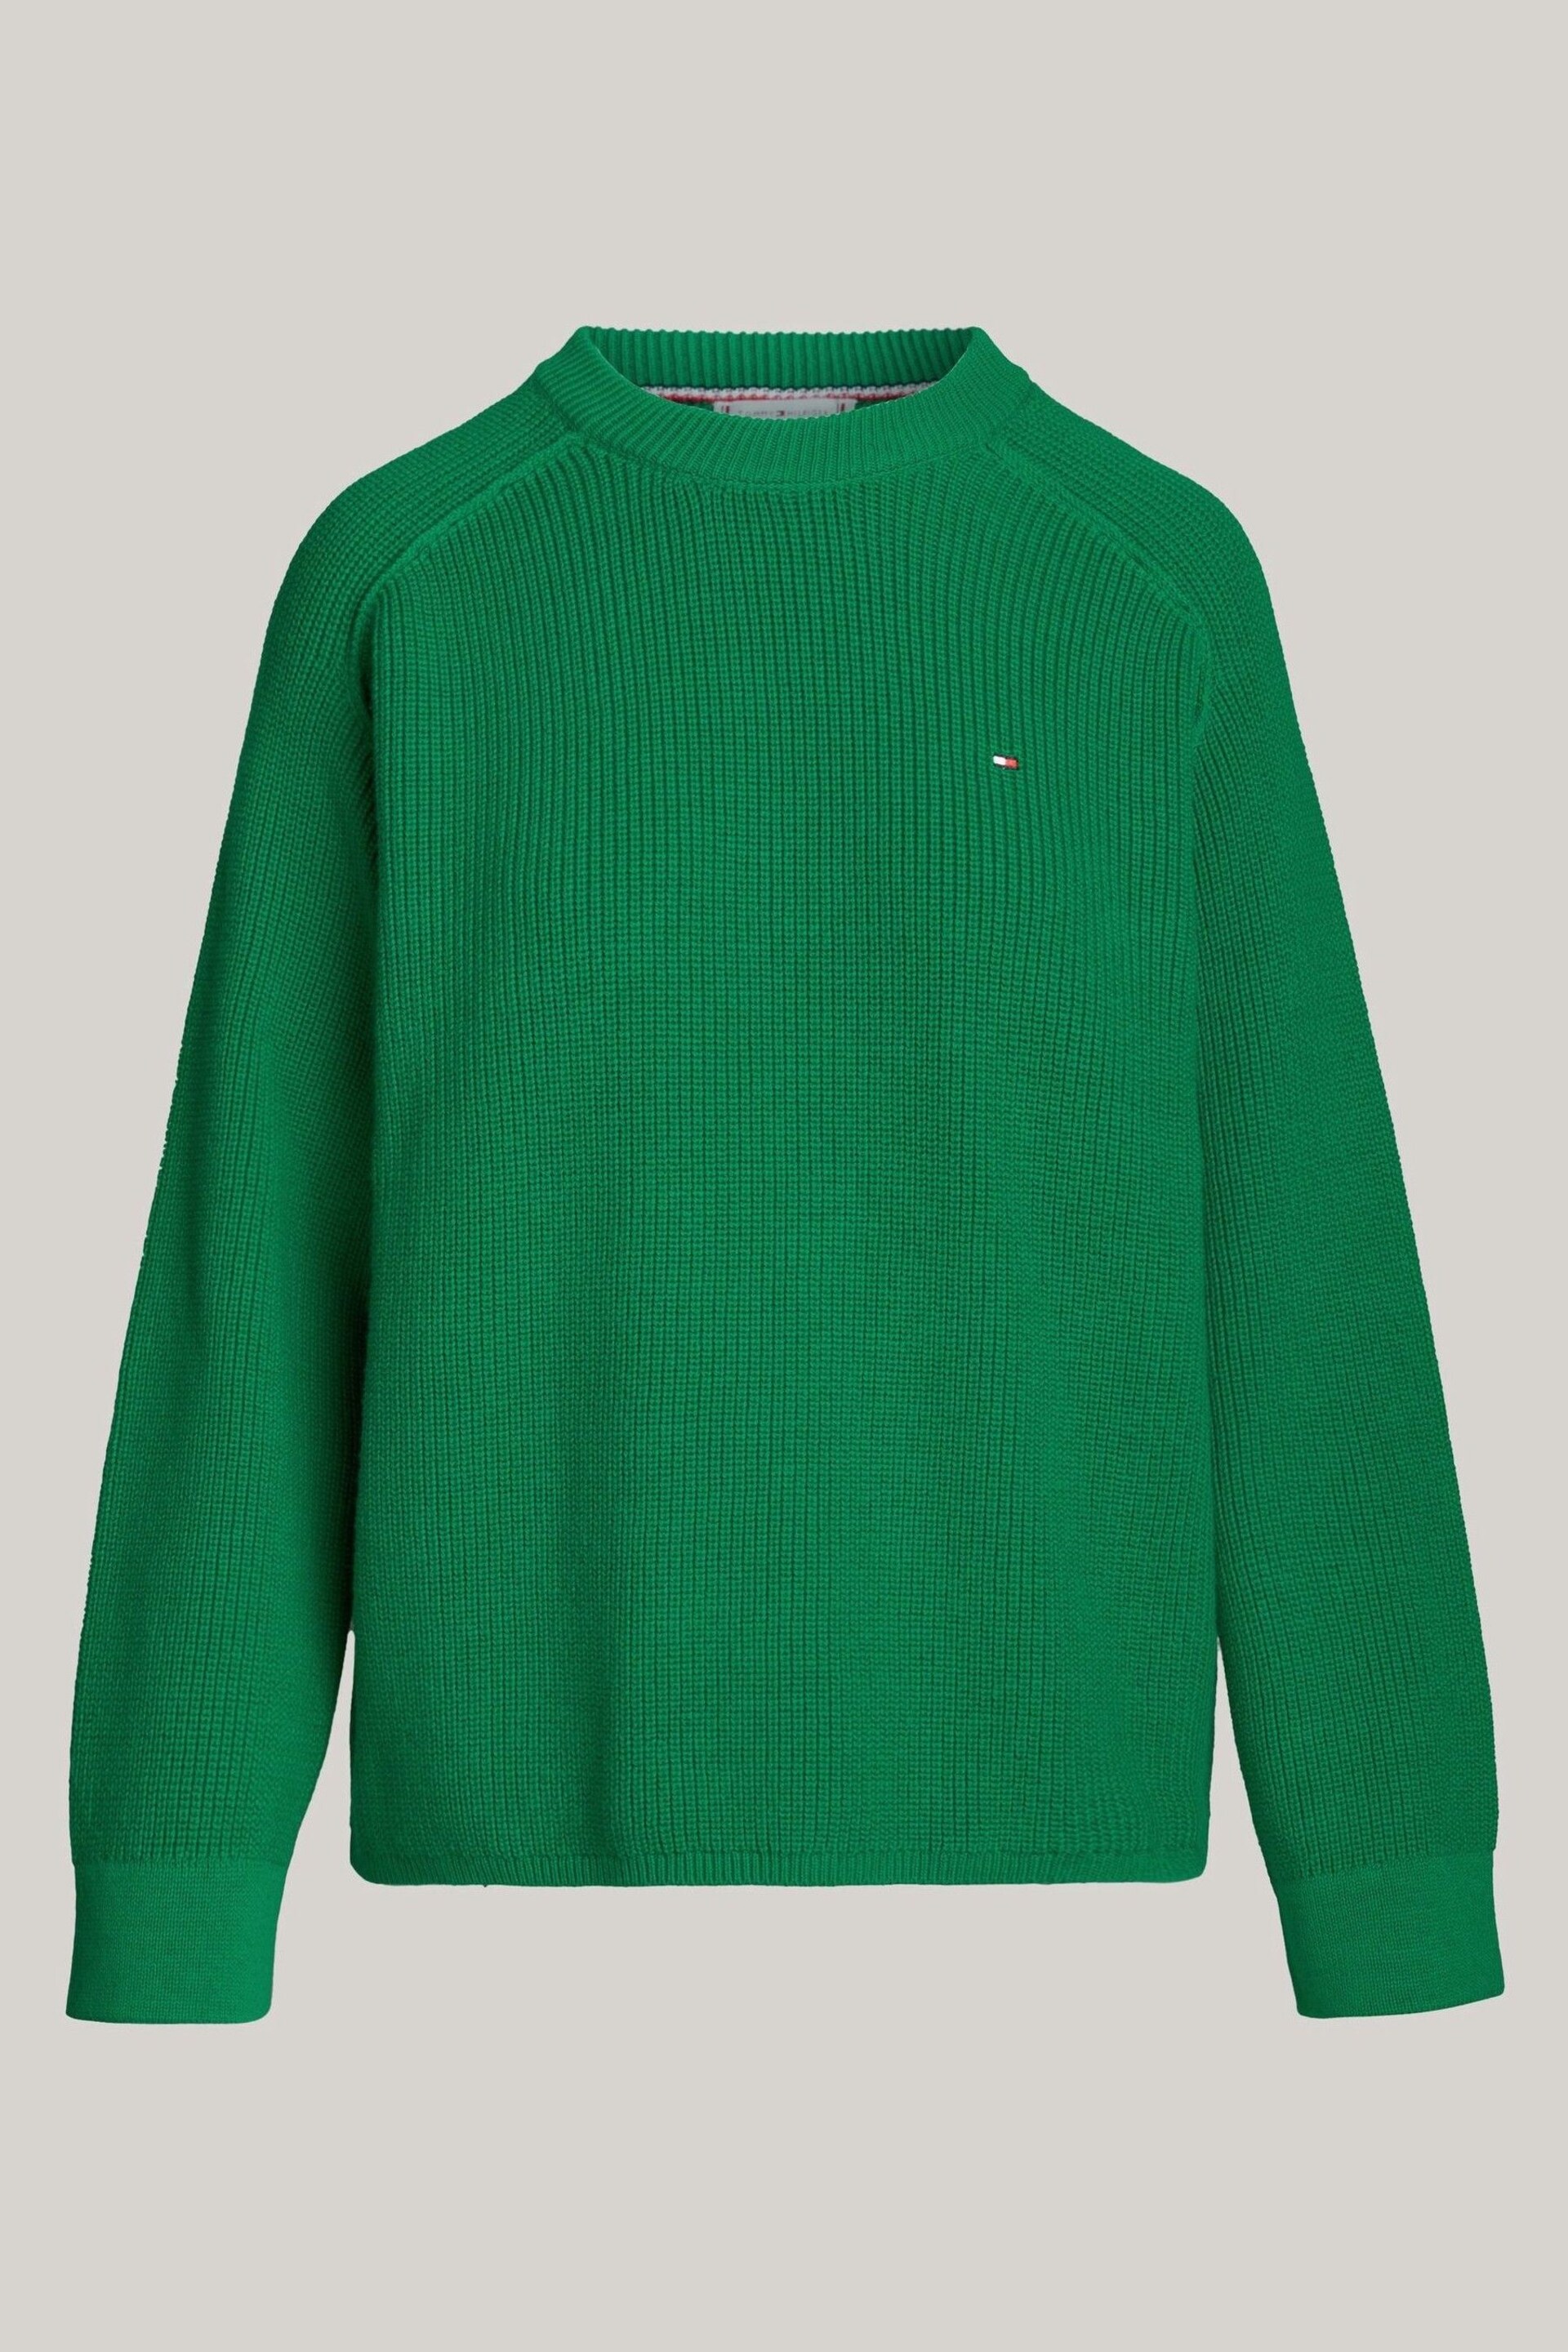 Tommy Hilfiger Green Cardi Stitch Sweater - Image 5 of 5